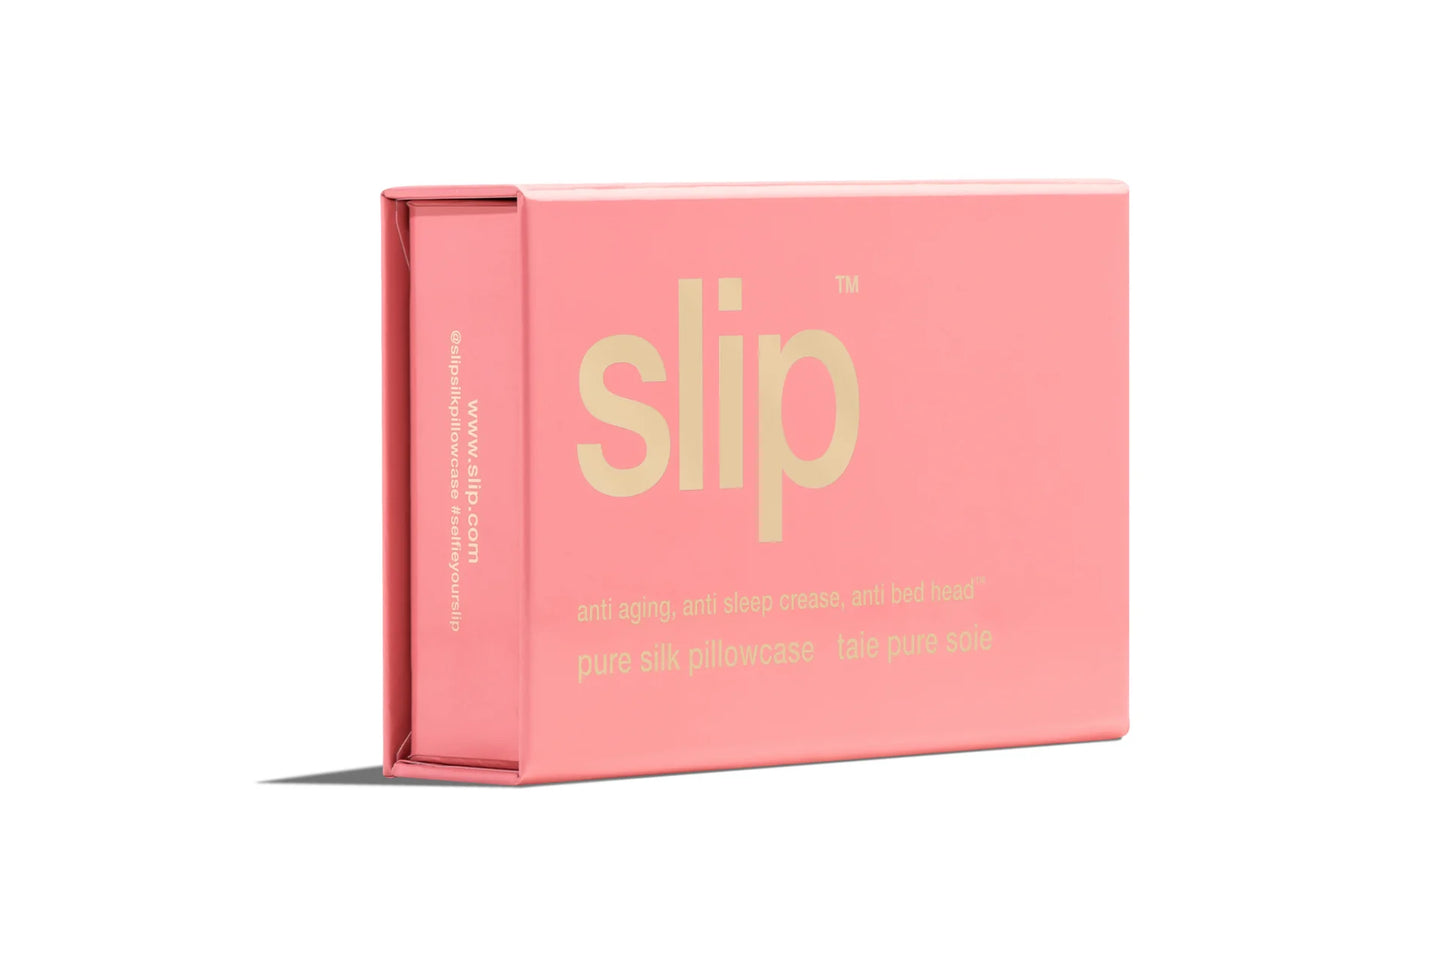 Blush Zippered Pillowcase | Limited Edition